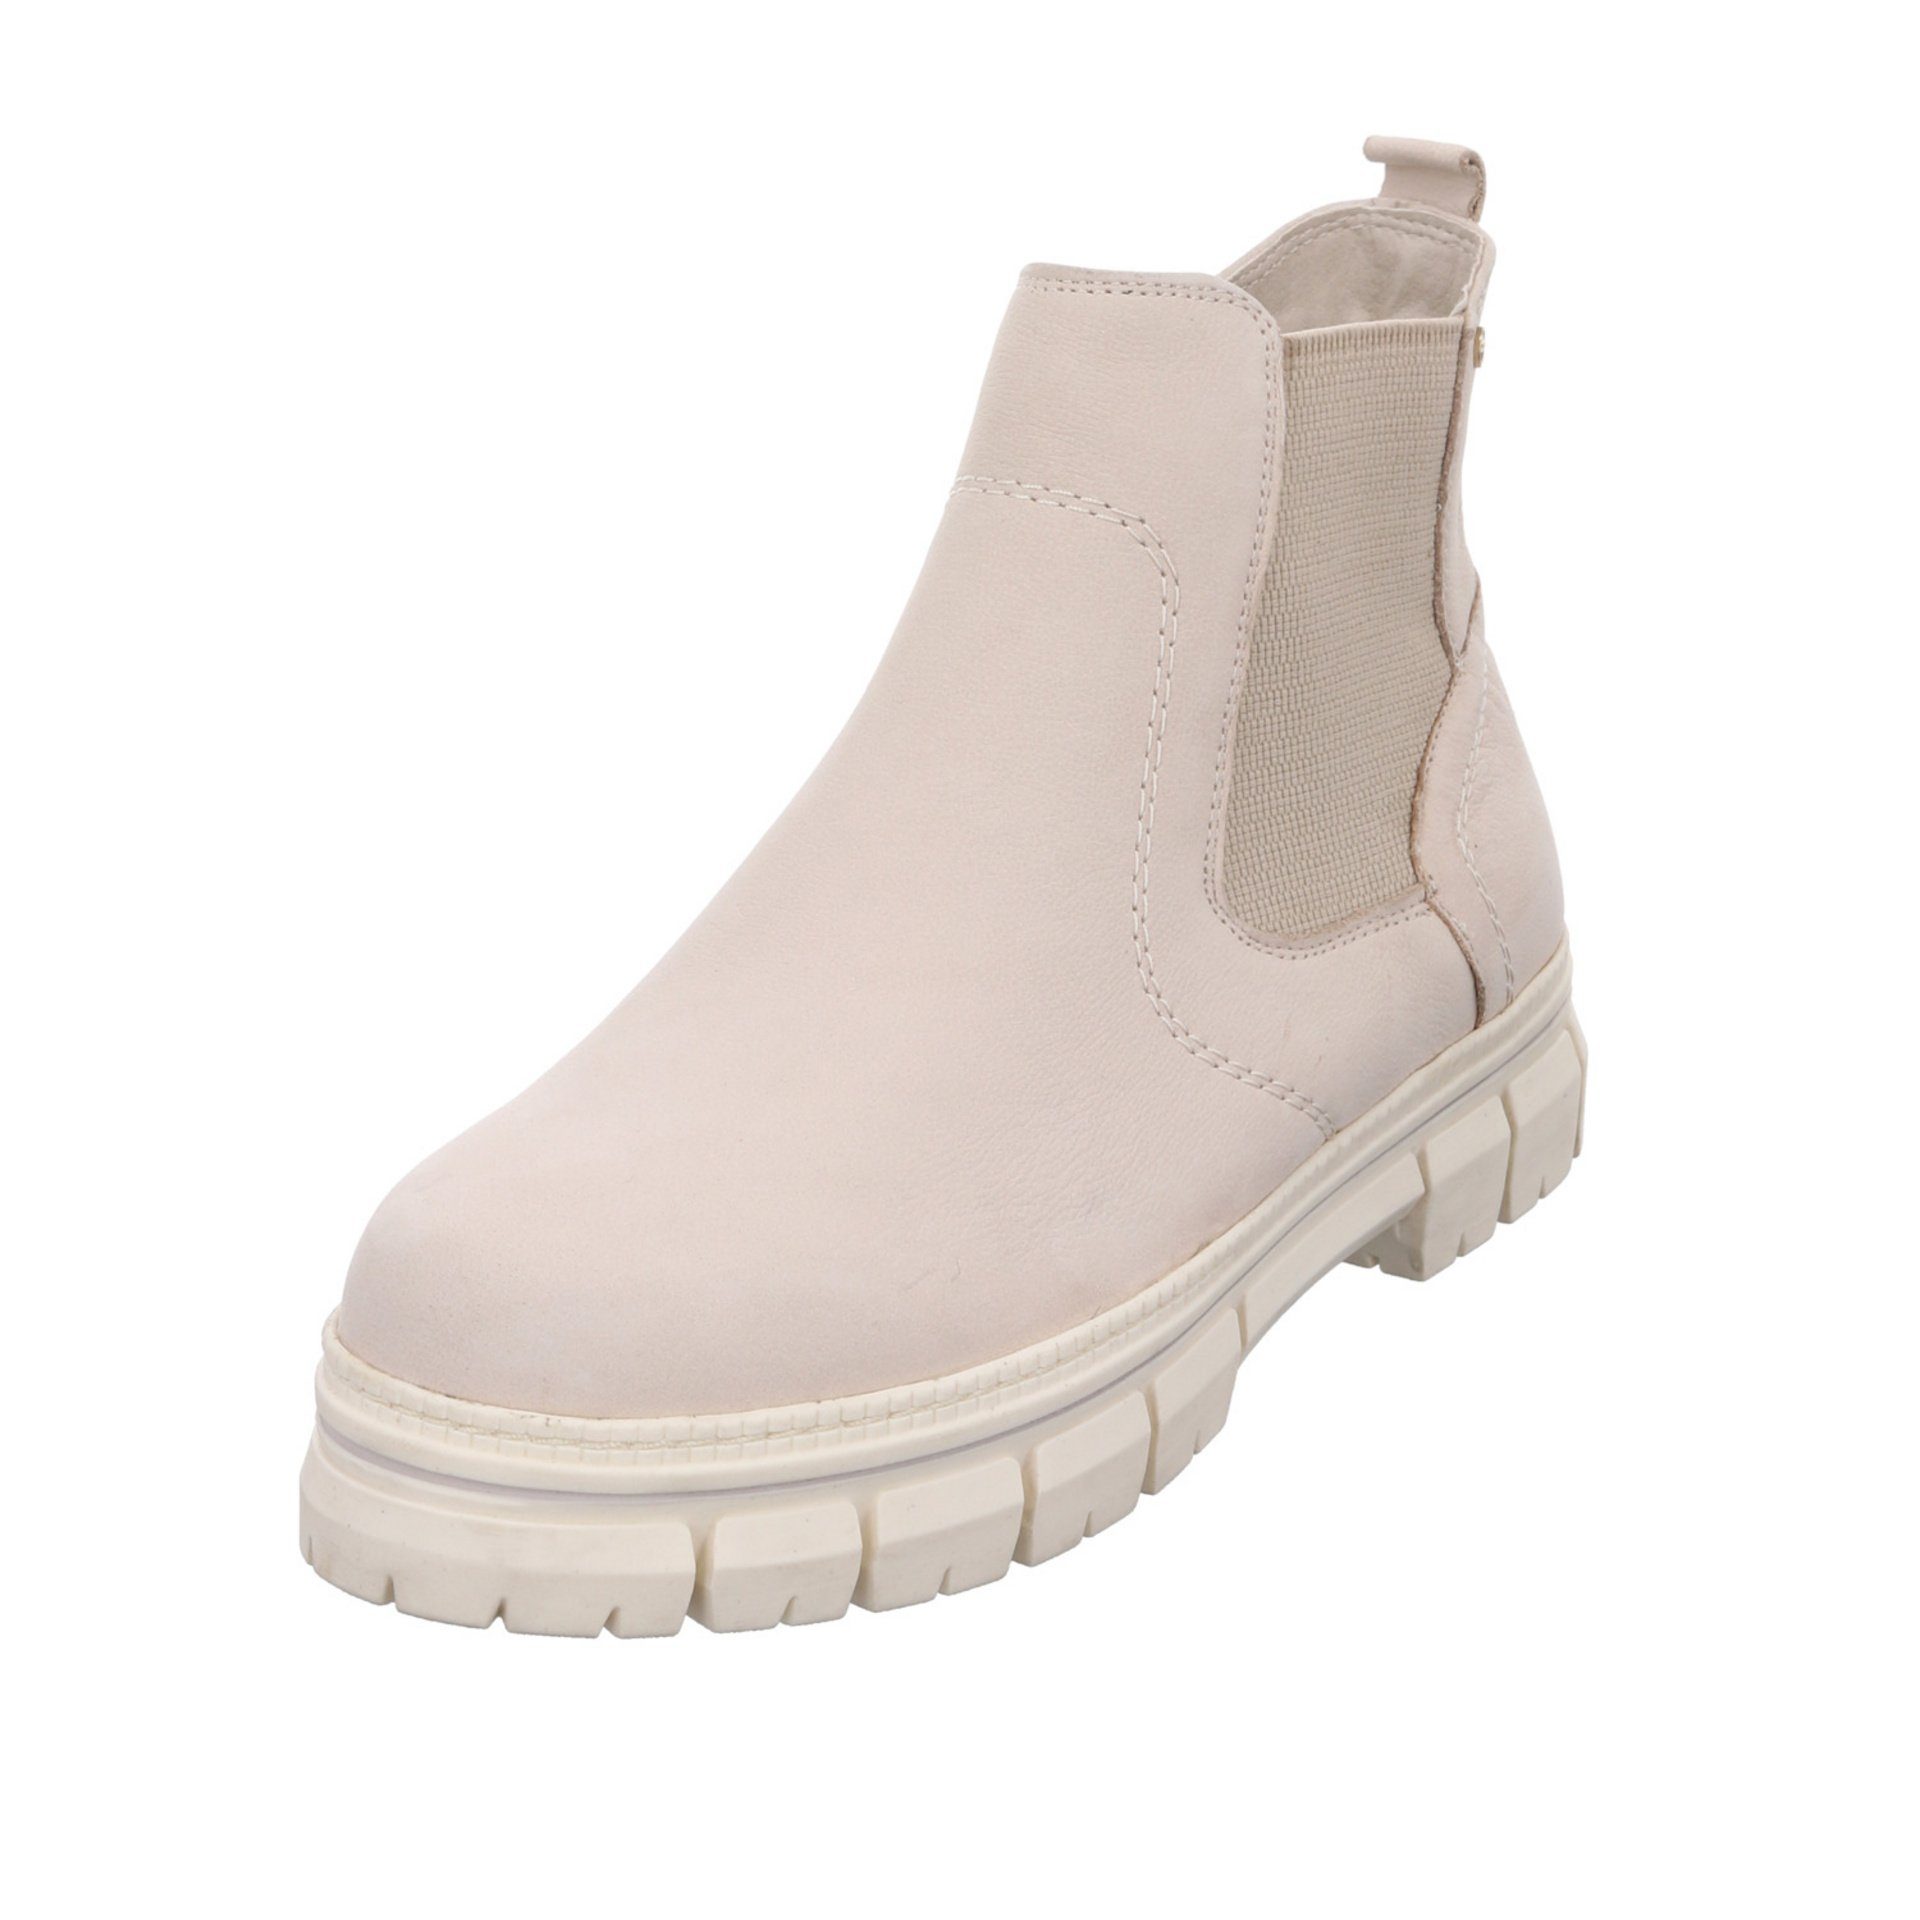 Tamaris COMFORT Damen Stiefeletten Schuhe Chelsea Boots Schnürstiefelette  Leder-/Textilkombination